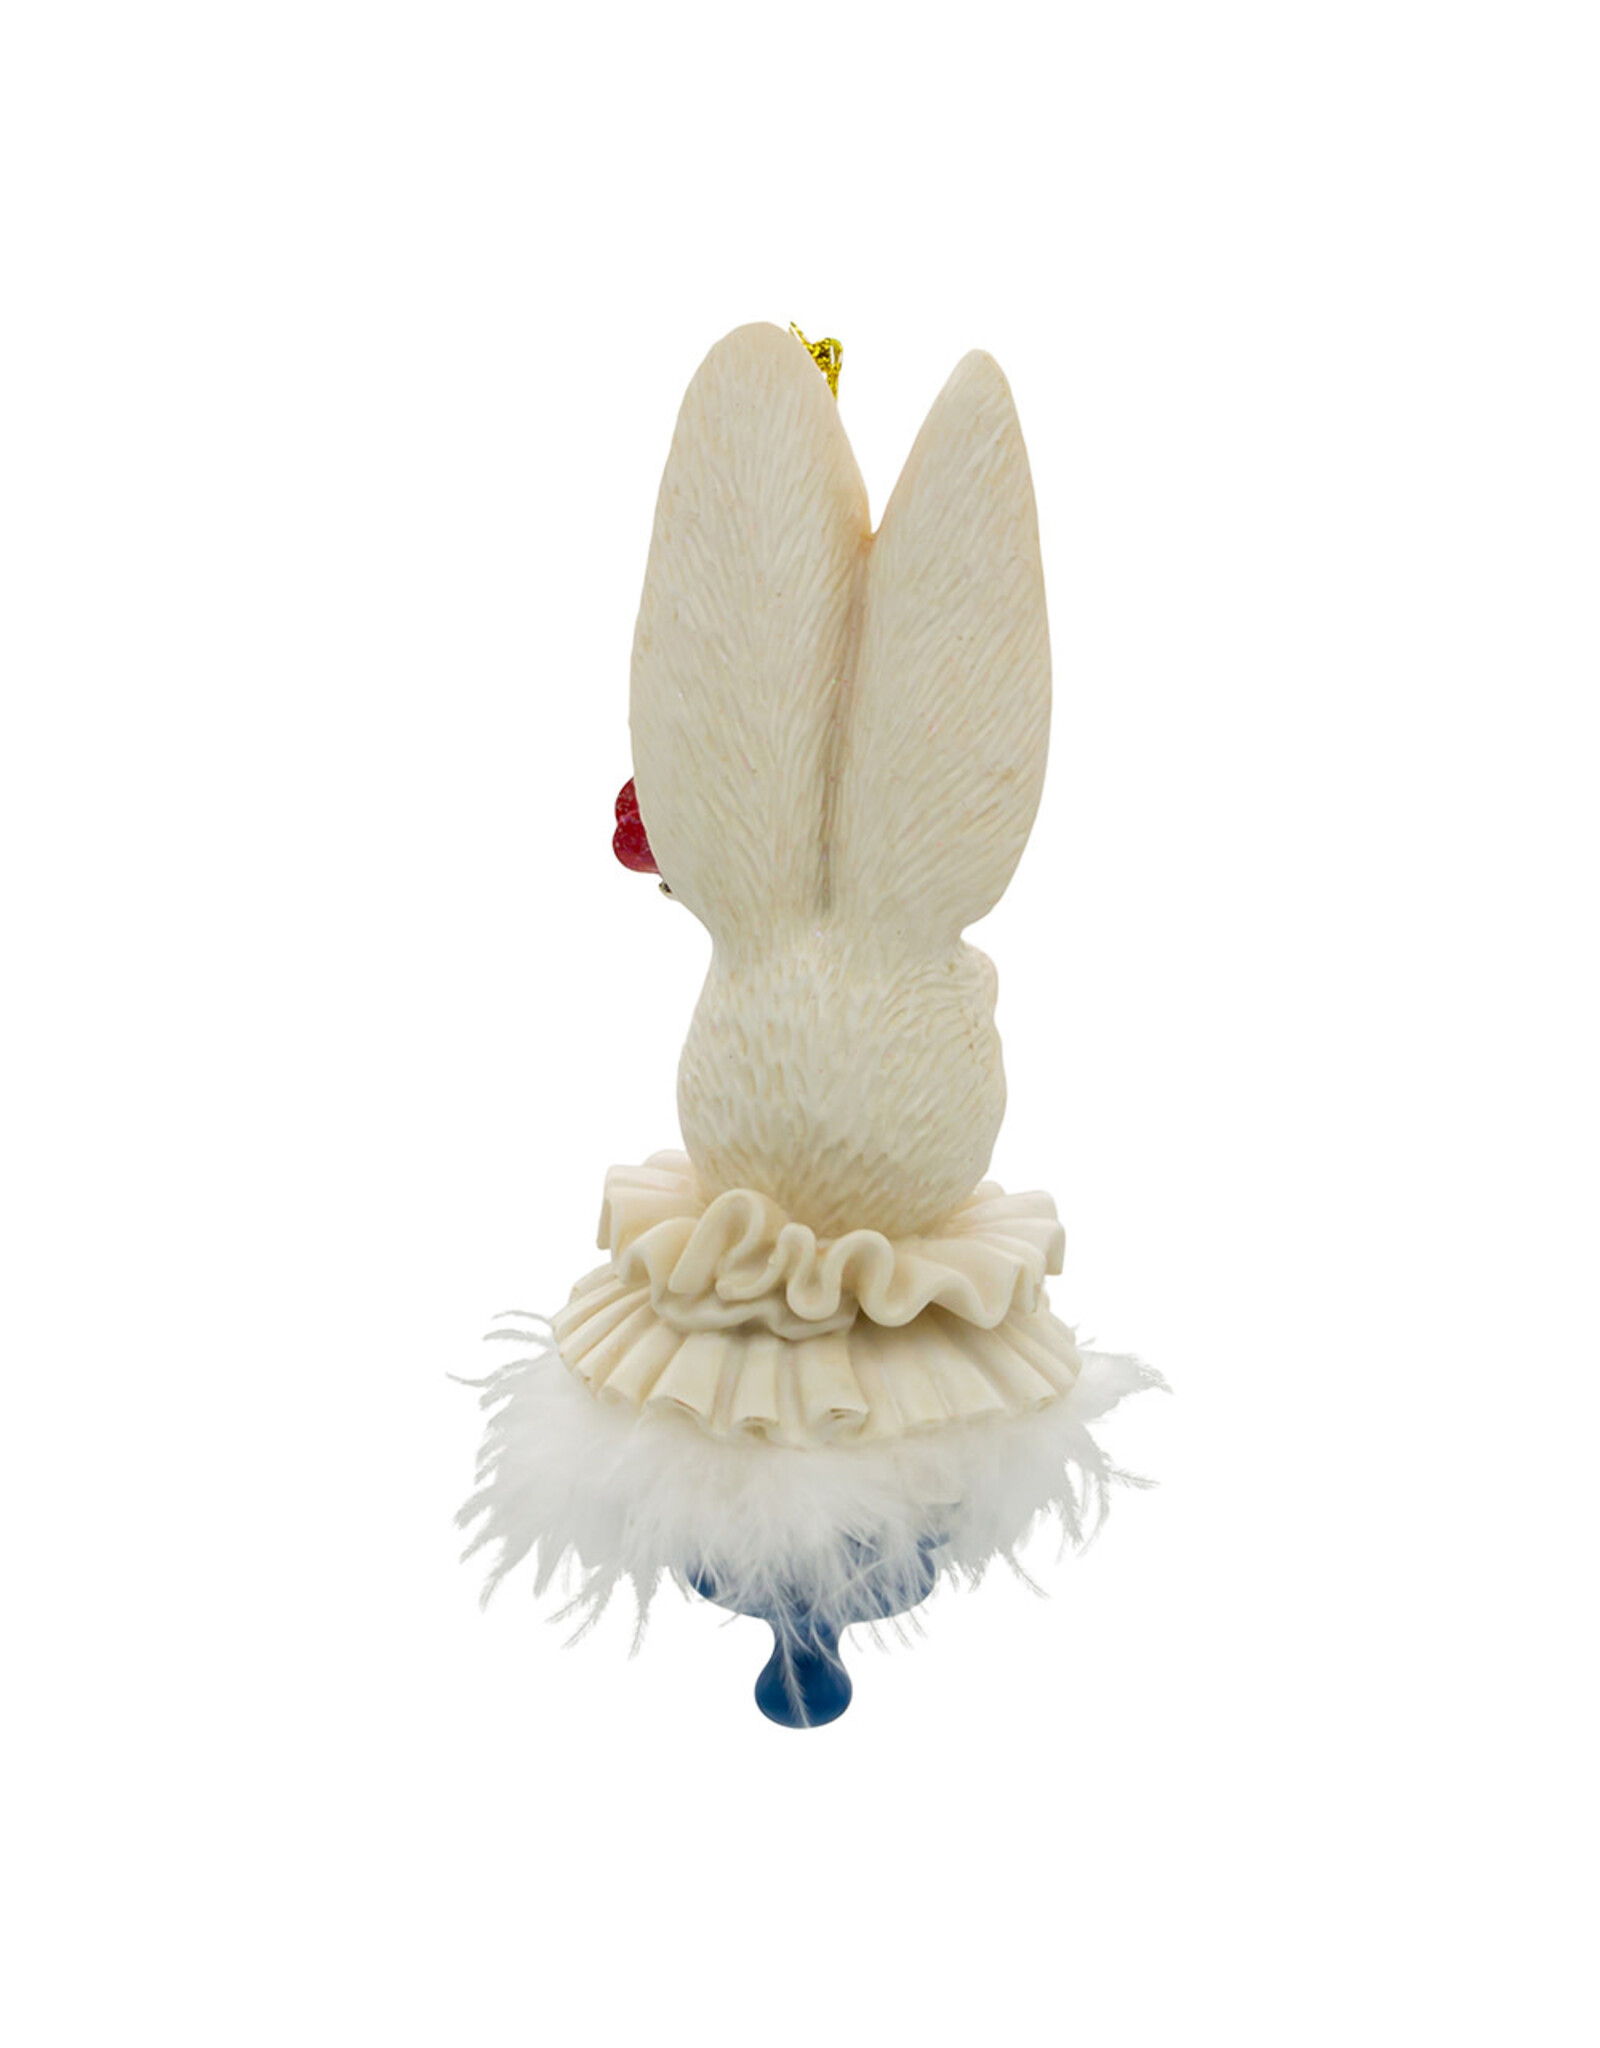 Kurt Adler Holly Hats Alice In Wonderland Ornament 6.5” Rabbit Hat